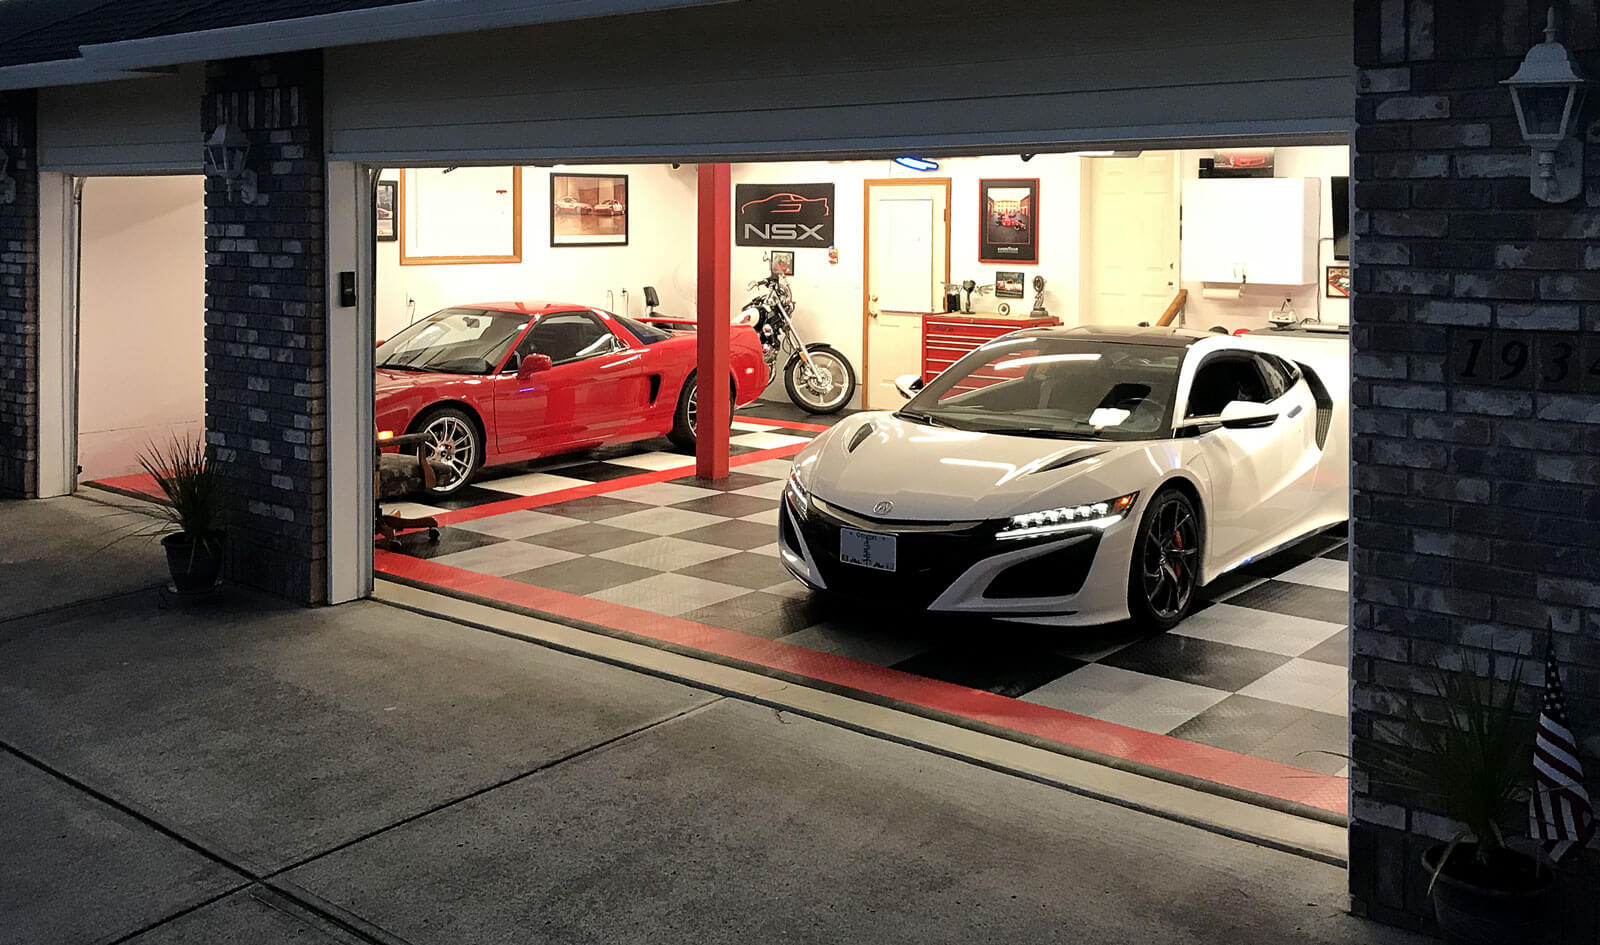 Outside view of this custom RaceDeck Diamond garage.